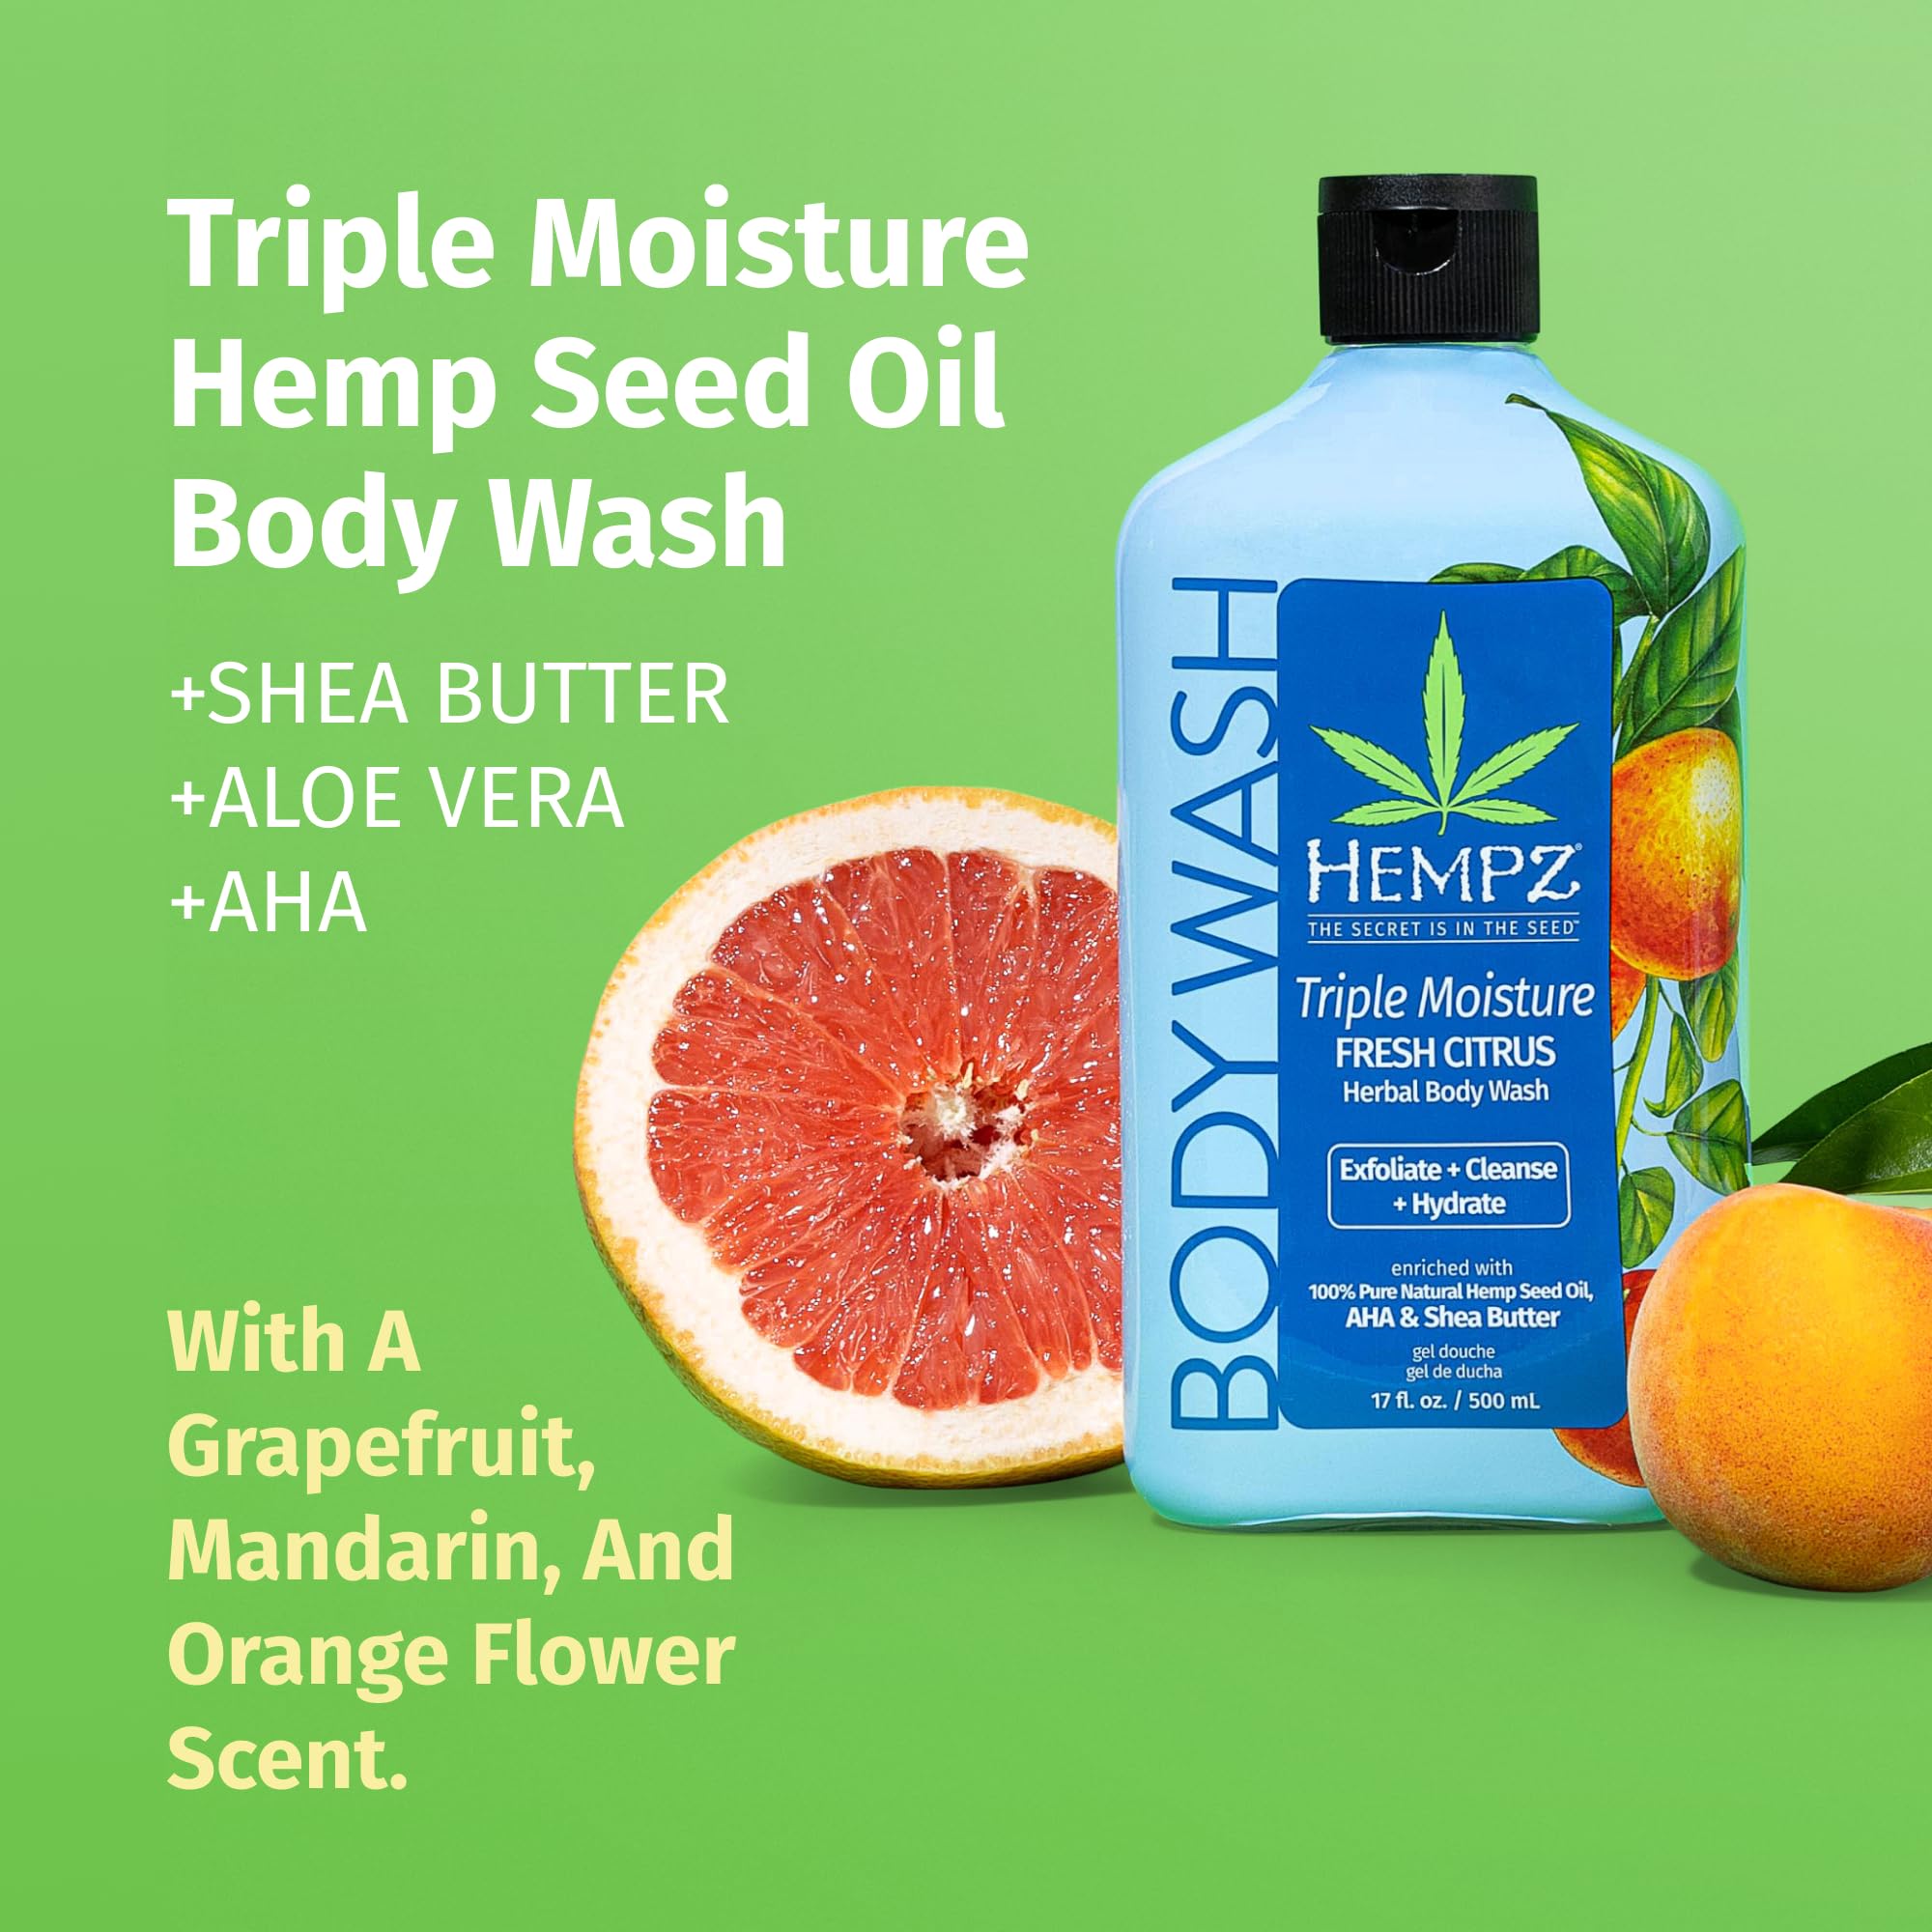 Hempz Triple Moisture Body Wash - Grapefruit & Peach - Hydrating for Sensitive Skin, Scented, Exfoliating with Shea Butter, Pure Hemp Seed Oil, and Algae for Sensitive Skin - 17 fl oz